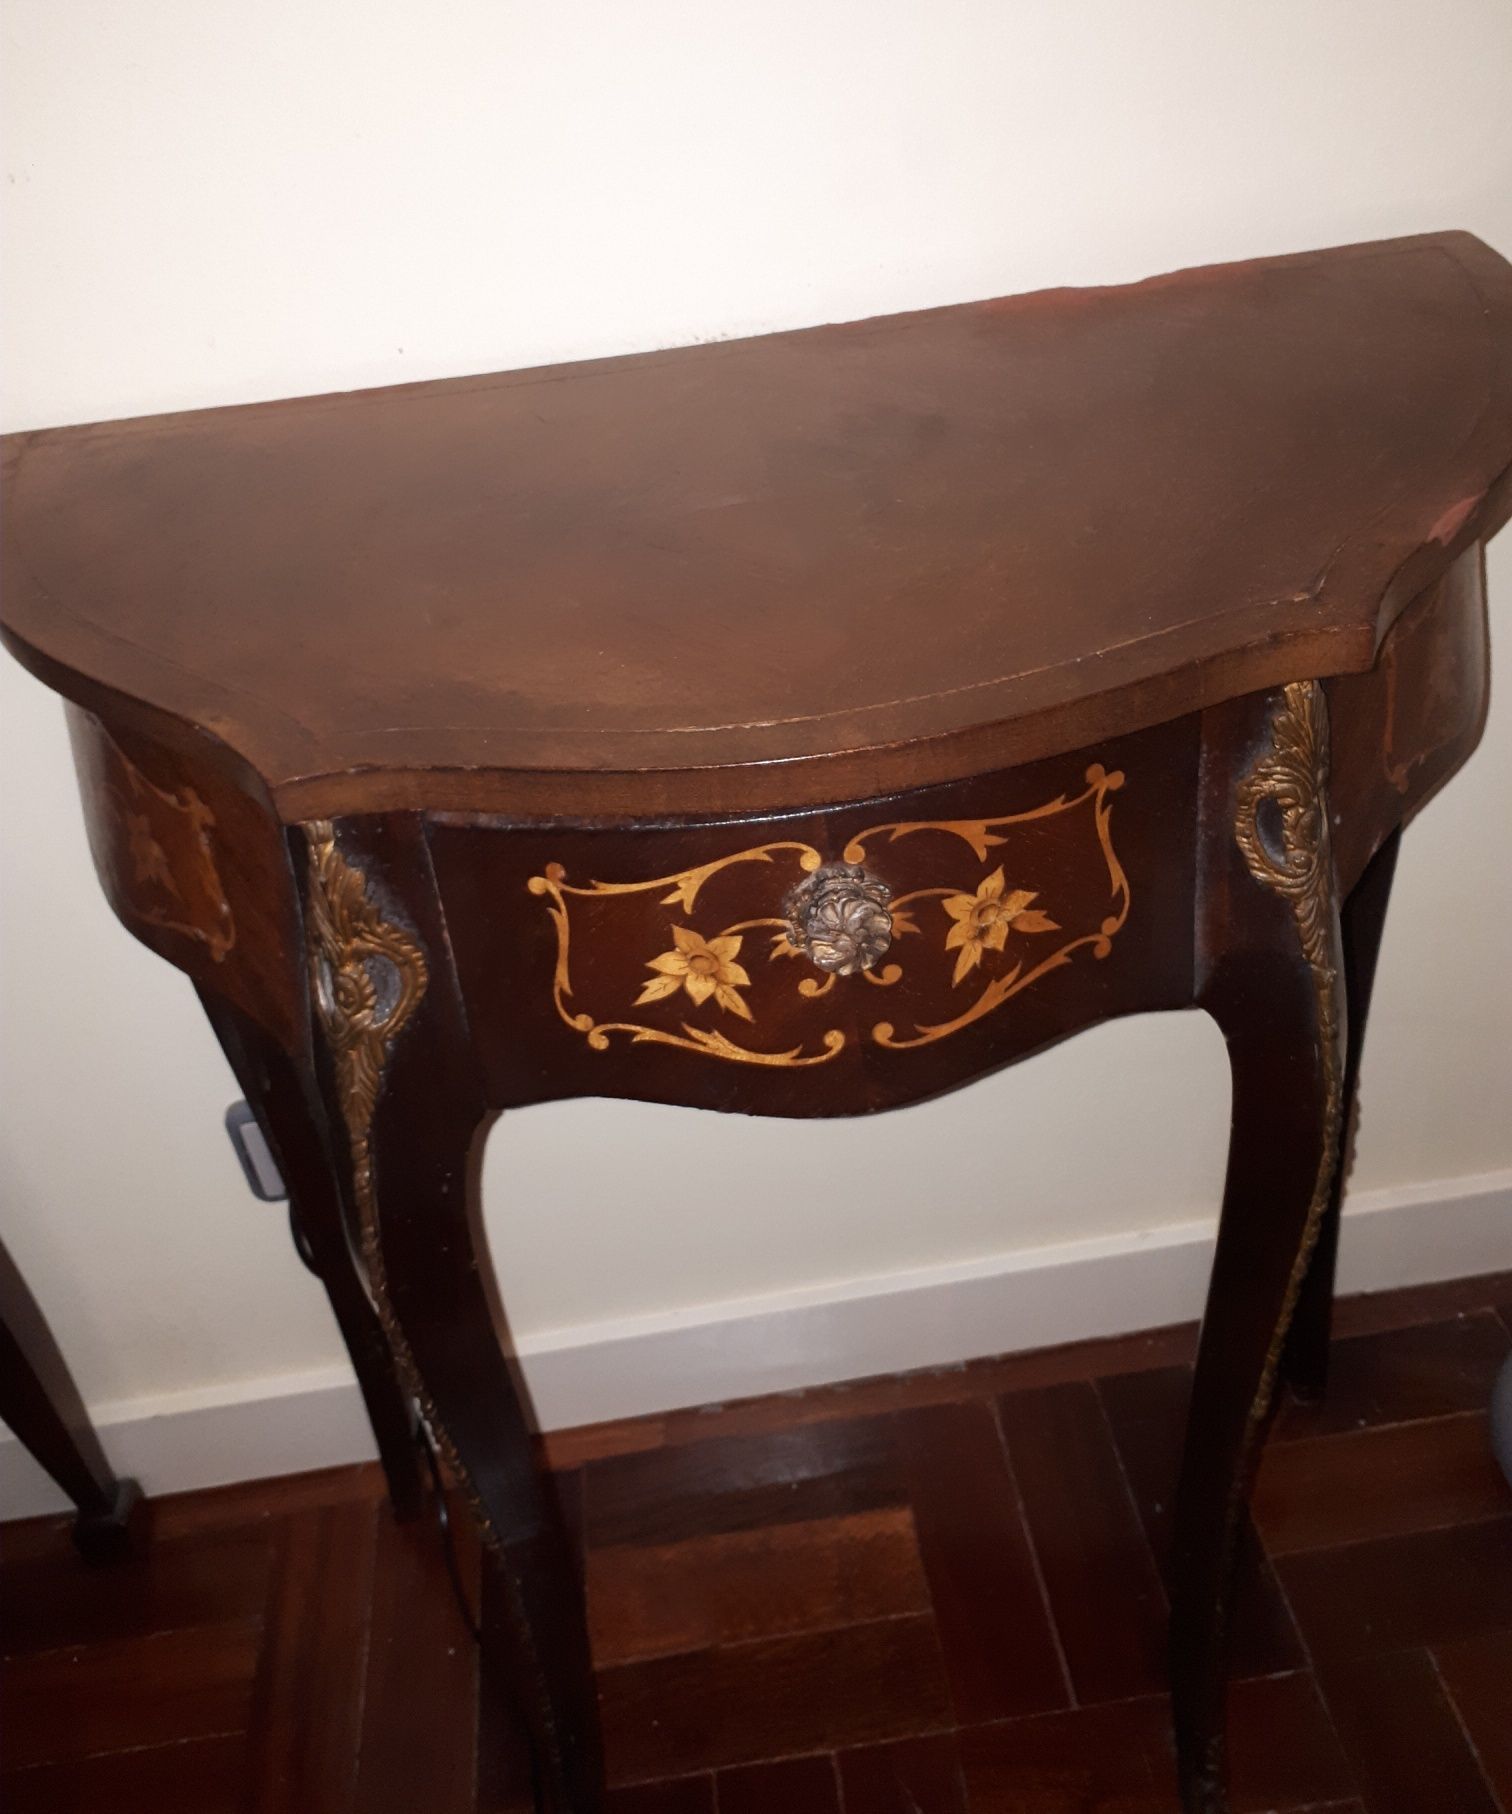 Bonita mesa anos 40,estilo Luis XV, madeira mogno detalh